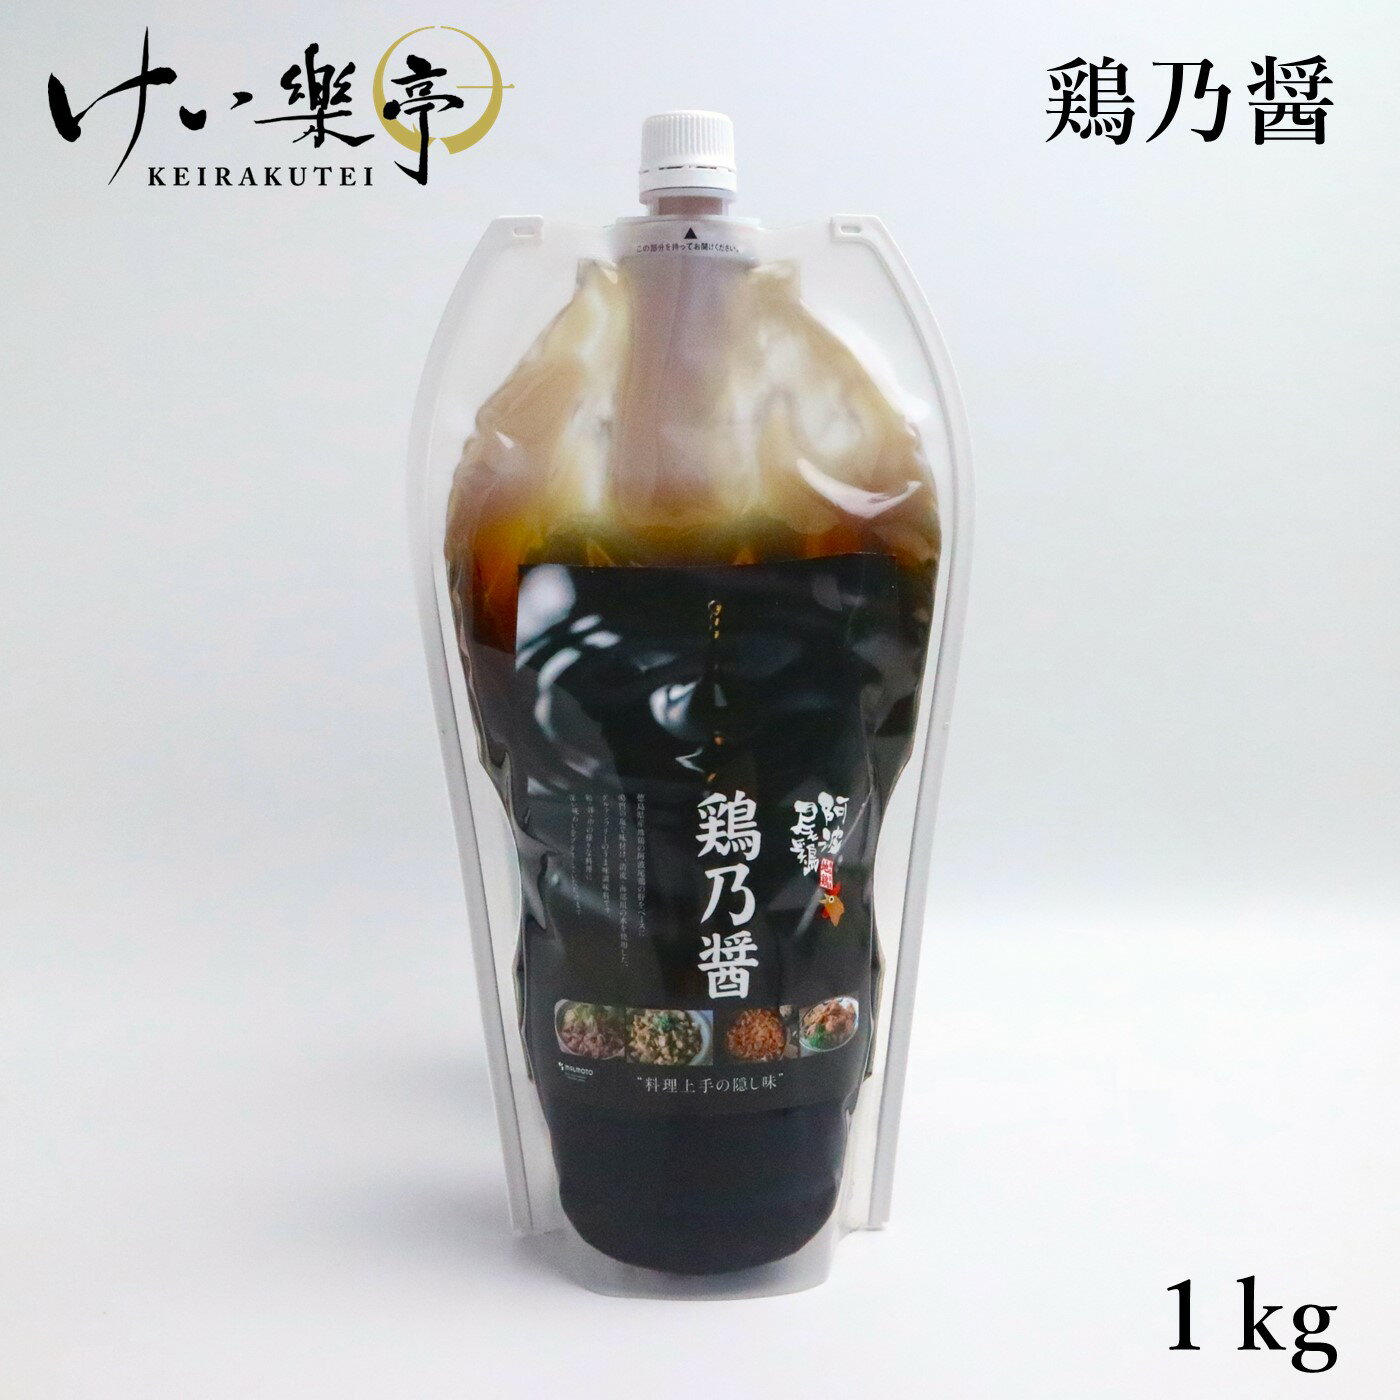 San-J Tamariグルテンフリー醤油、黒ボトル、10オンス San-J Tamari Gluten Free Soy Sauce, Black Bottle, 10 Ounce